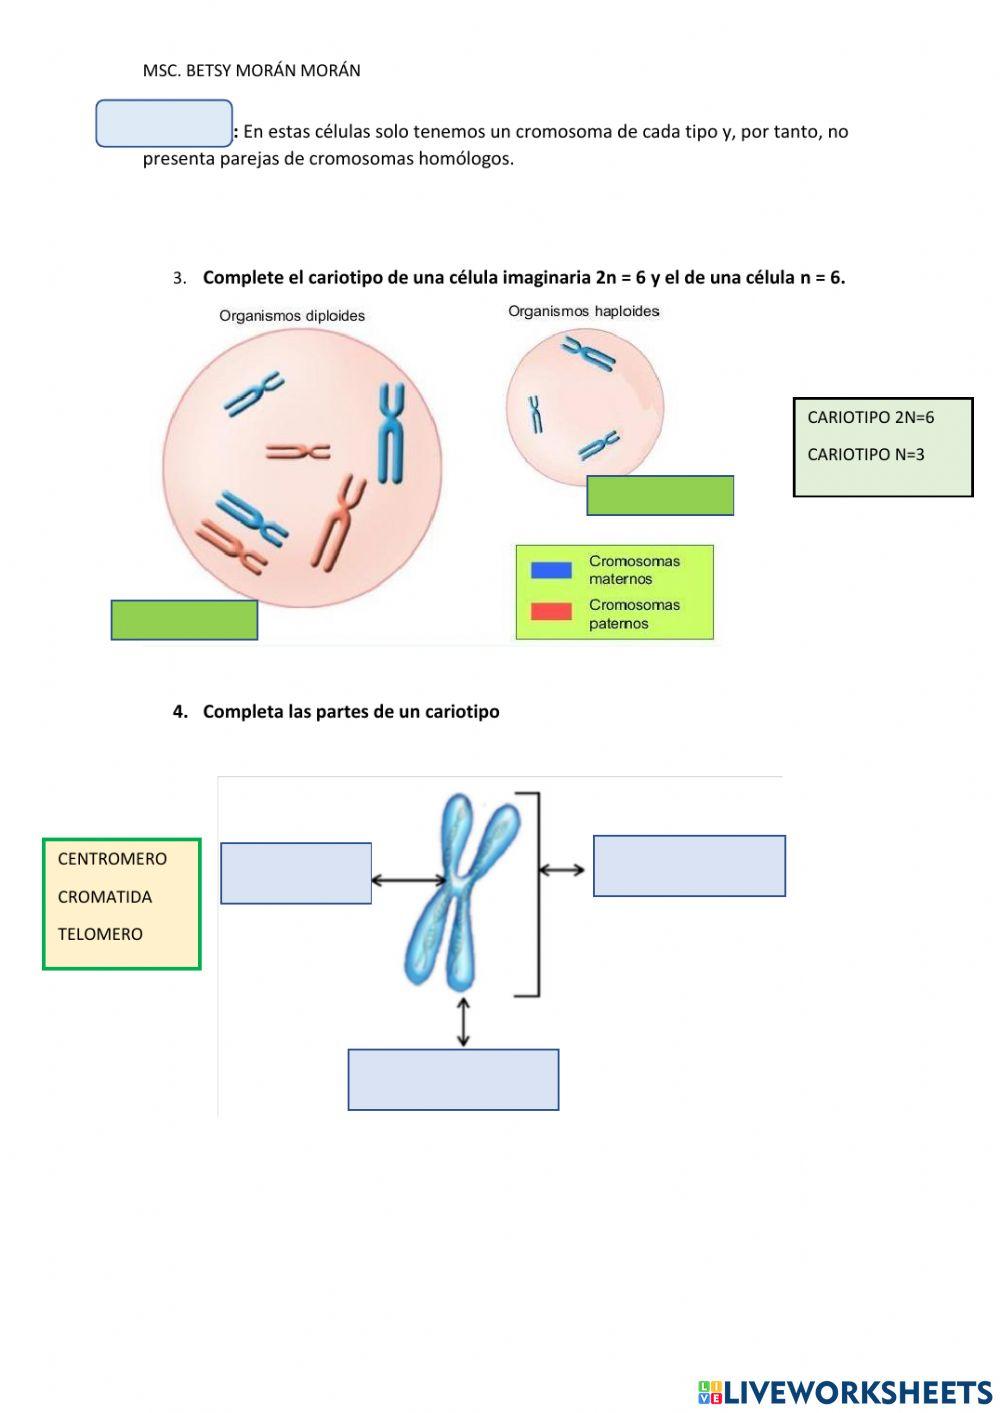 Nucleo y dotacion cromosomica